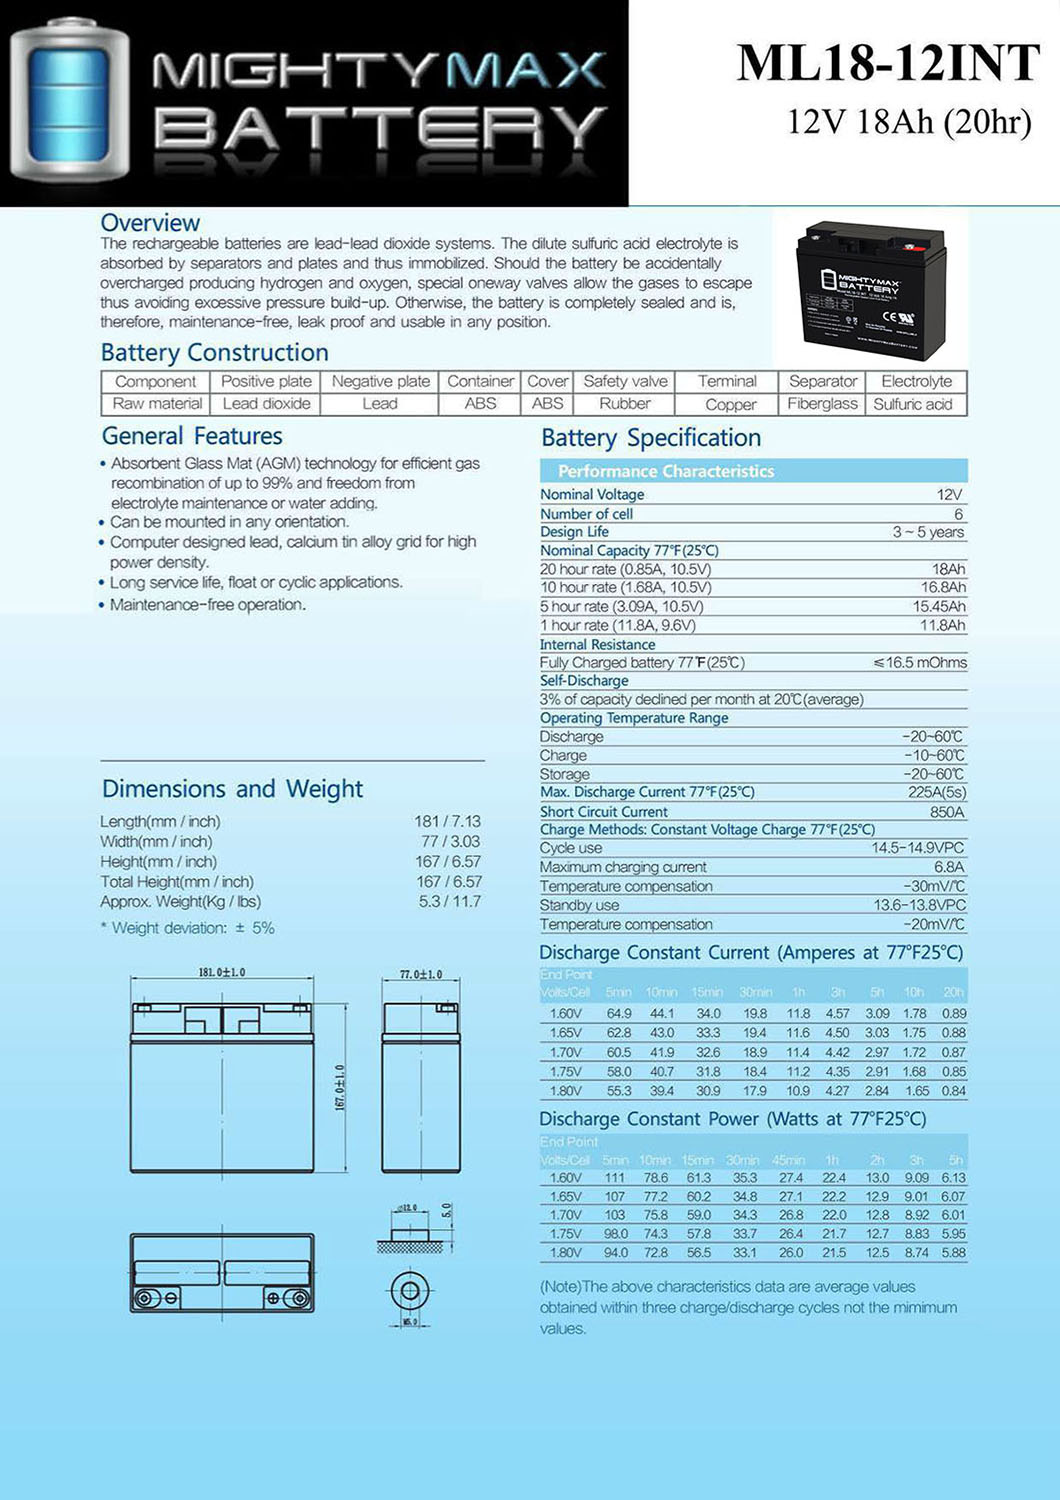 12V 18AH SLA Battery for Black Decker Electromate 400 - MightyMaxBattery